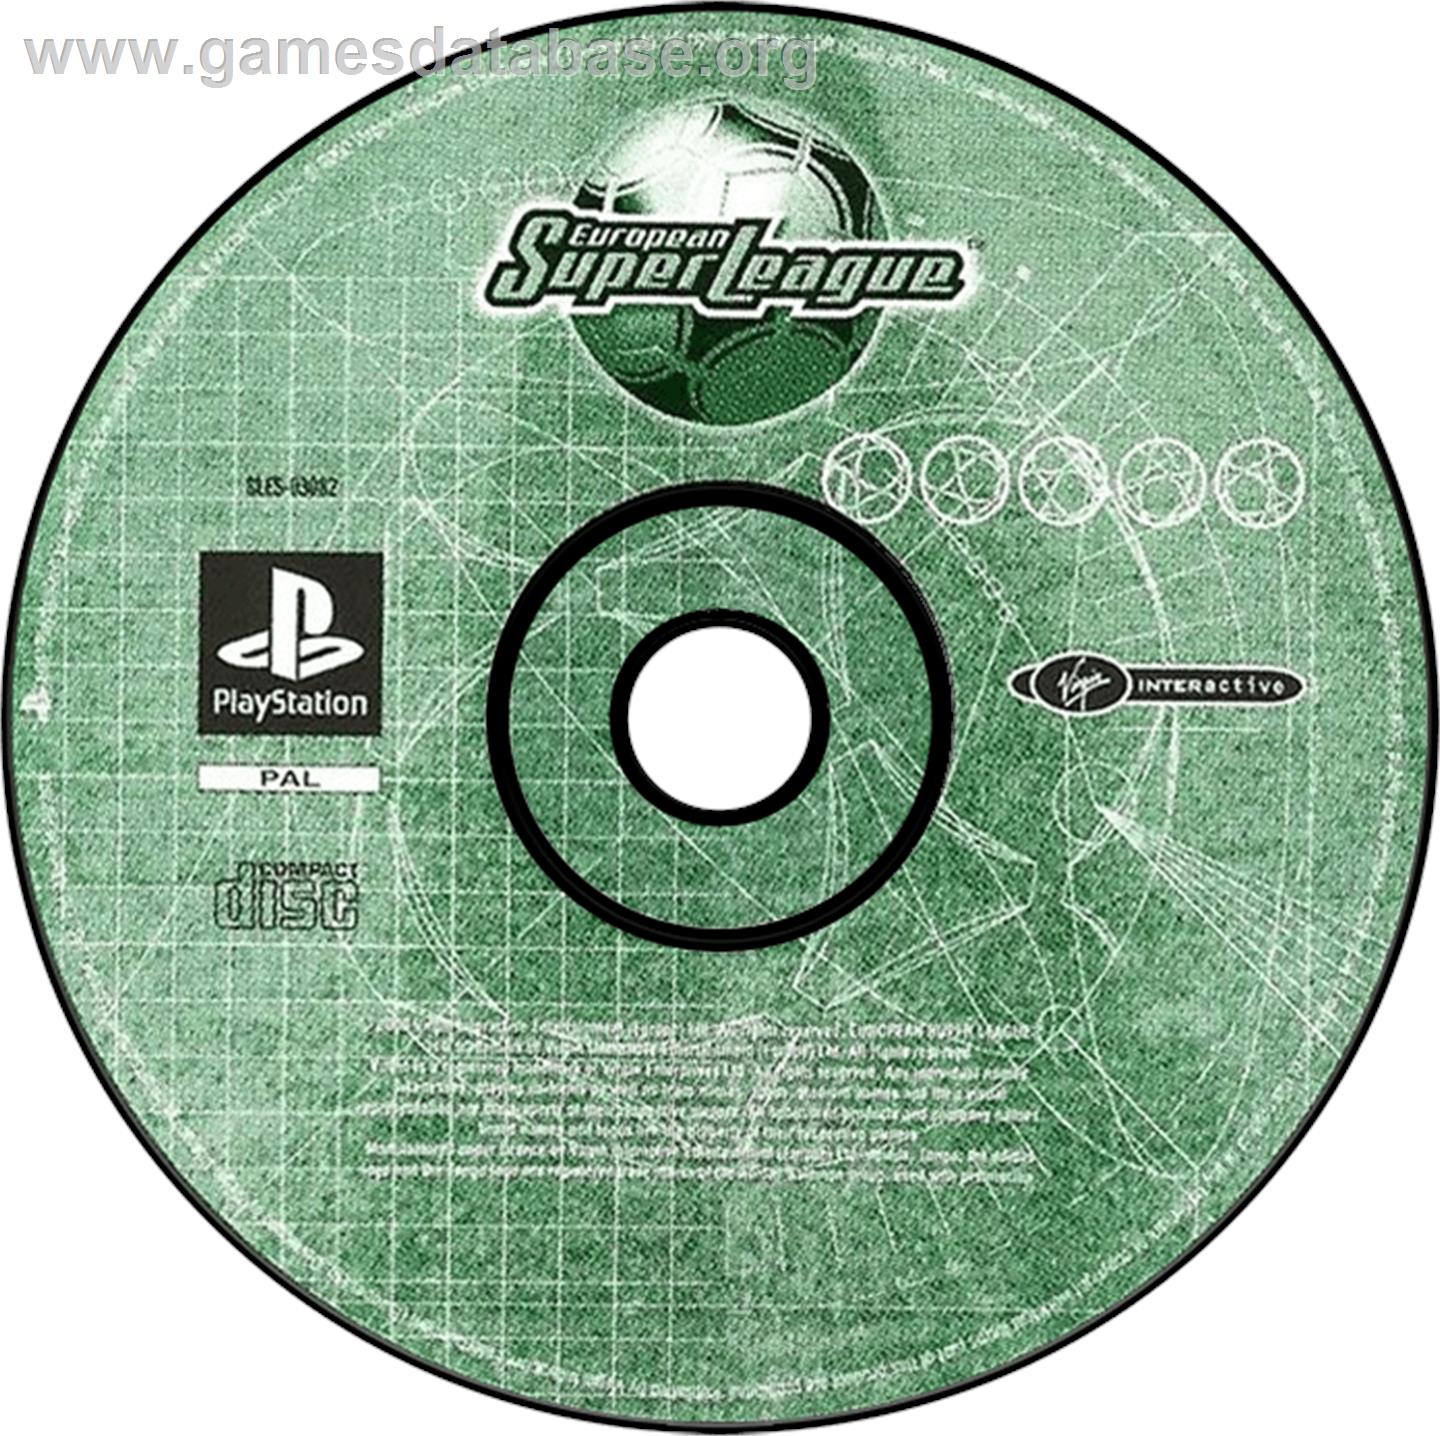 European Super League - Sony Playstation - Artwork - Disc